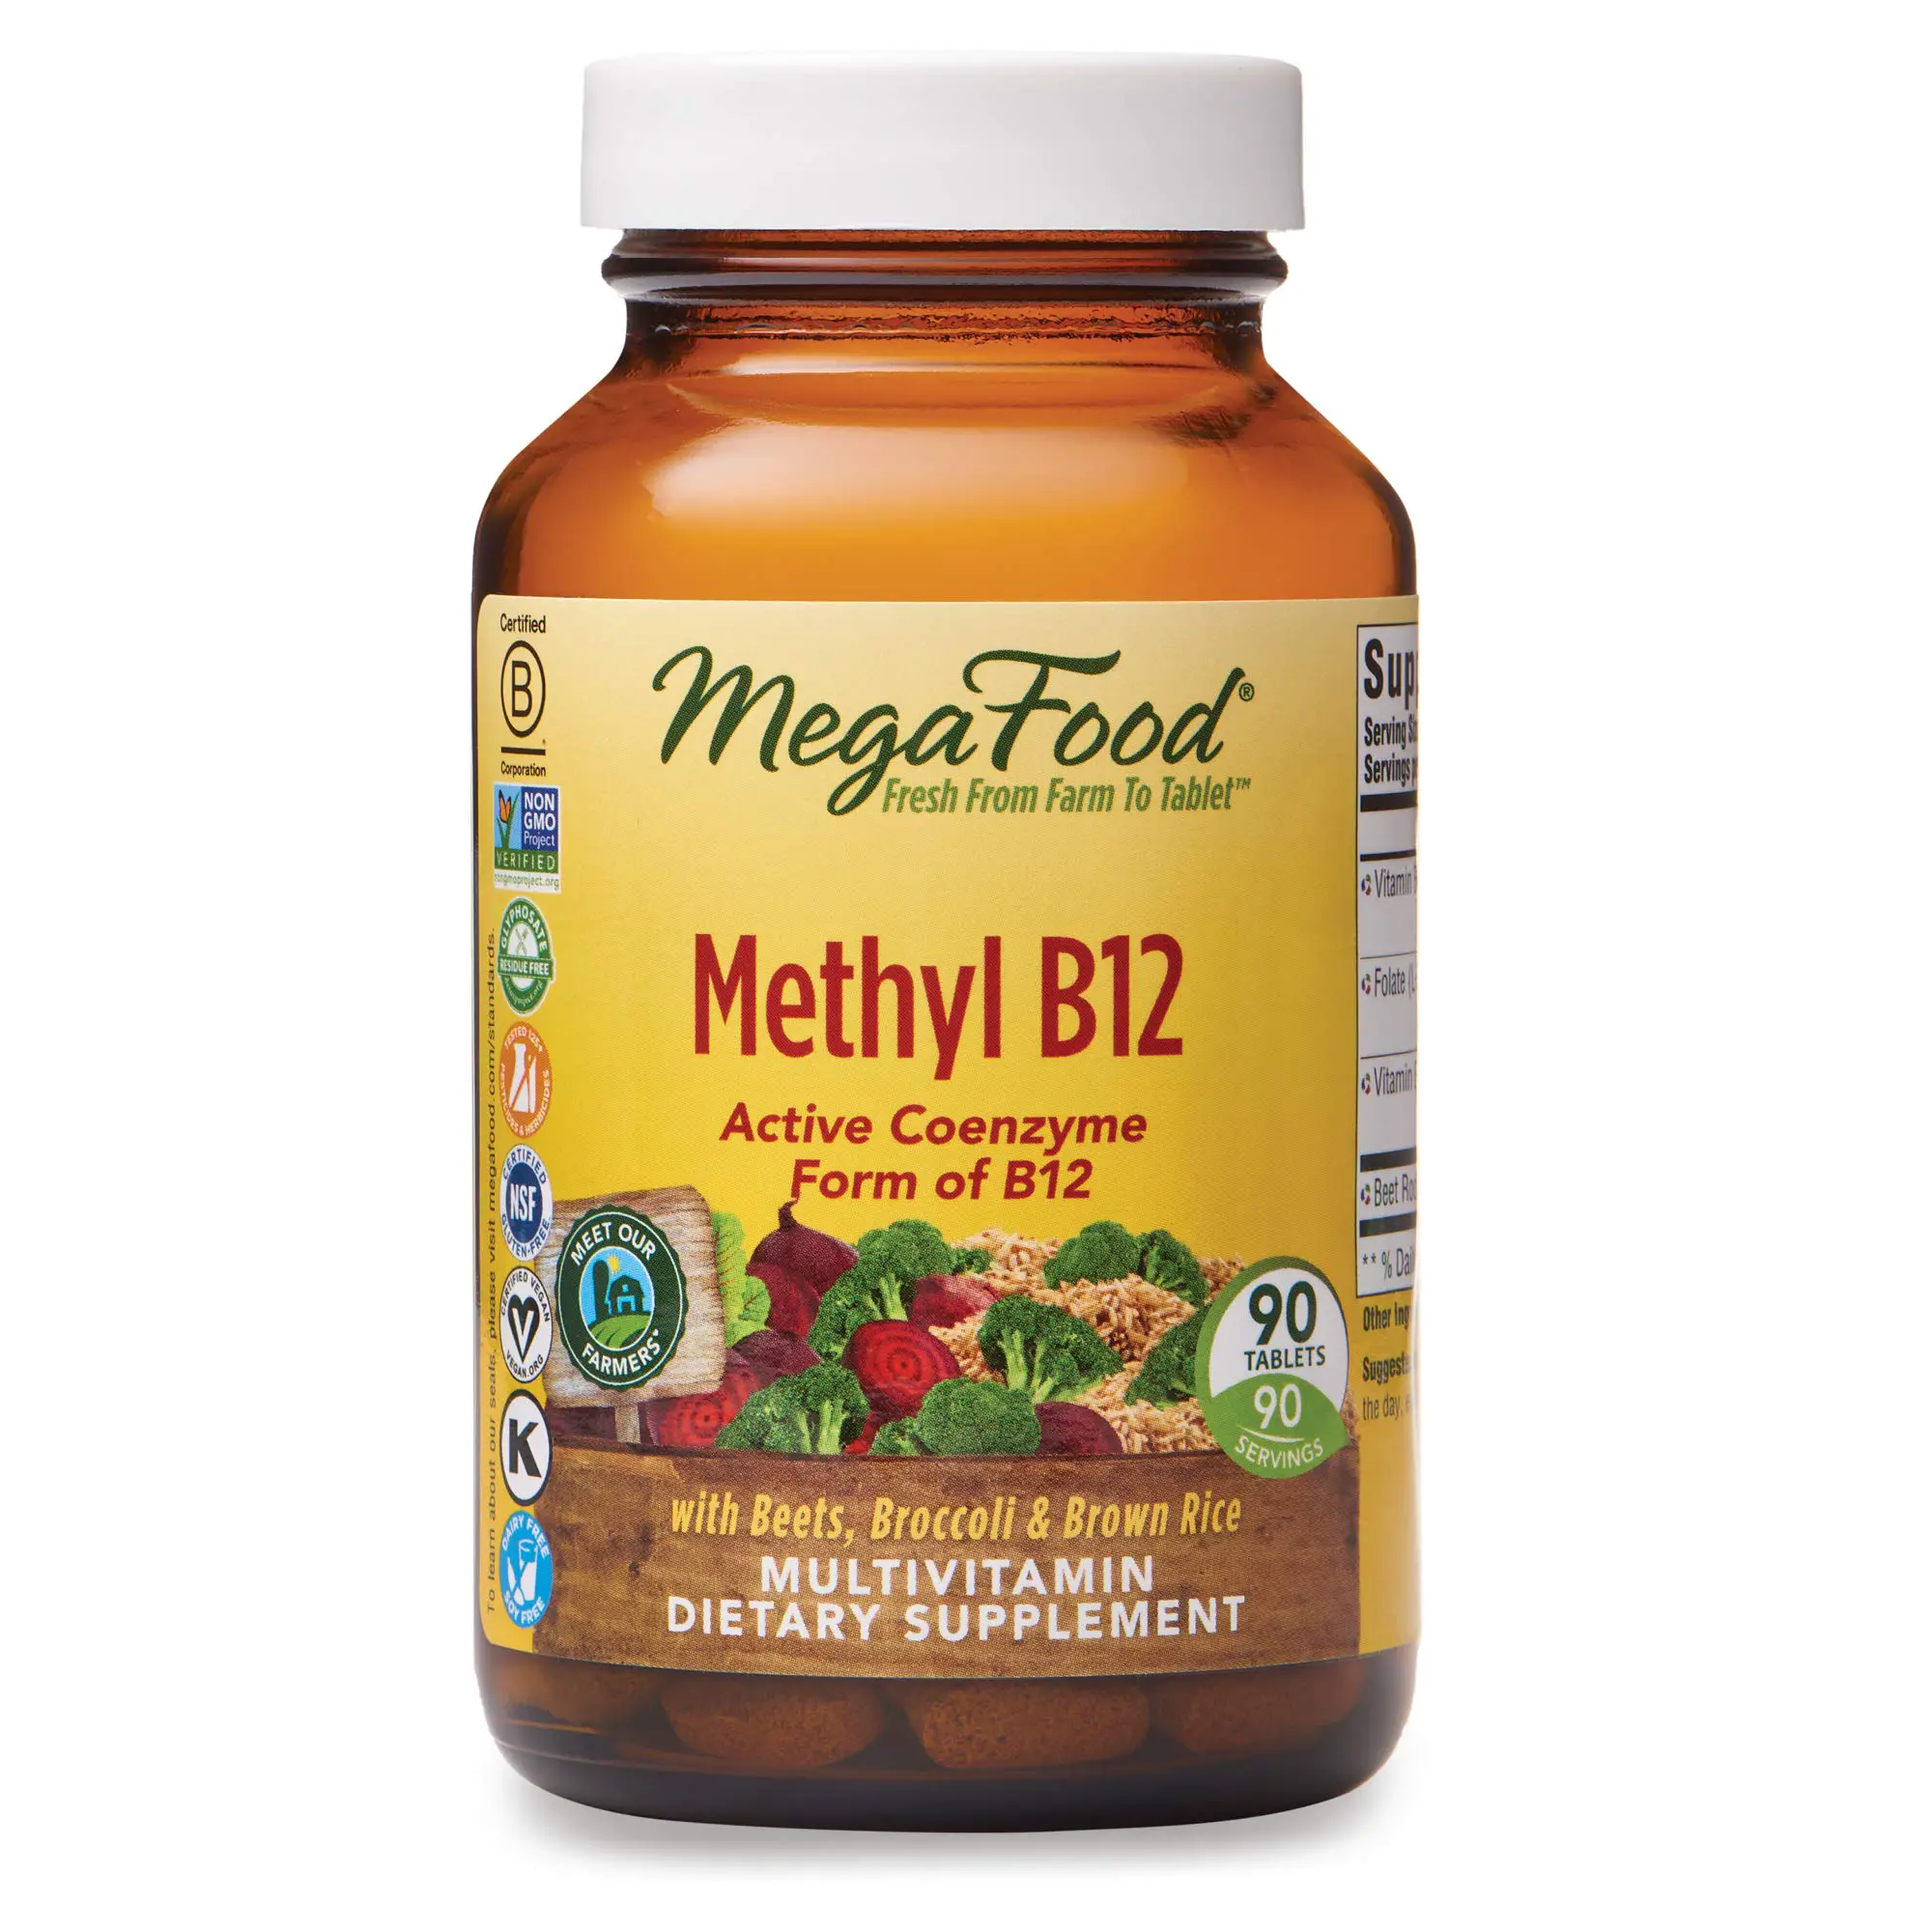 Megafood Methyl B12 Active Coenzyme Form